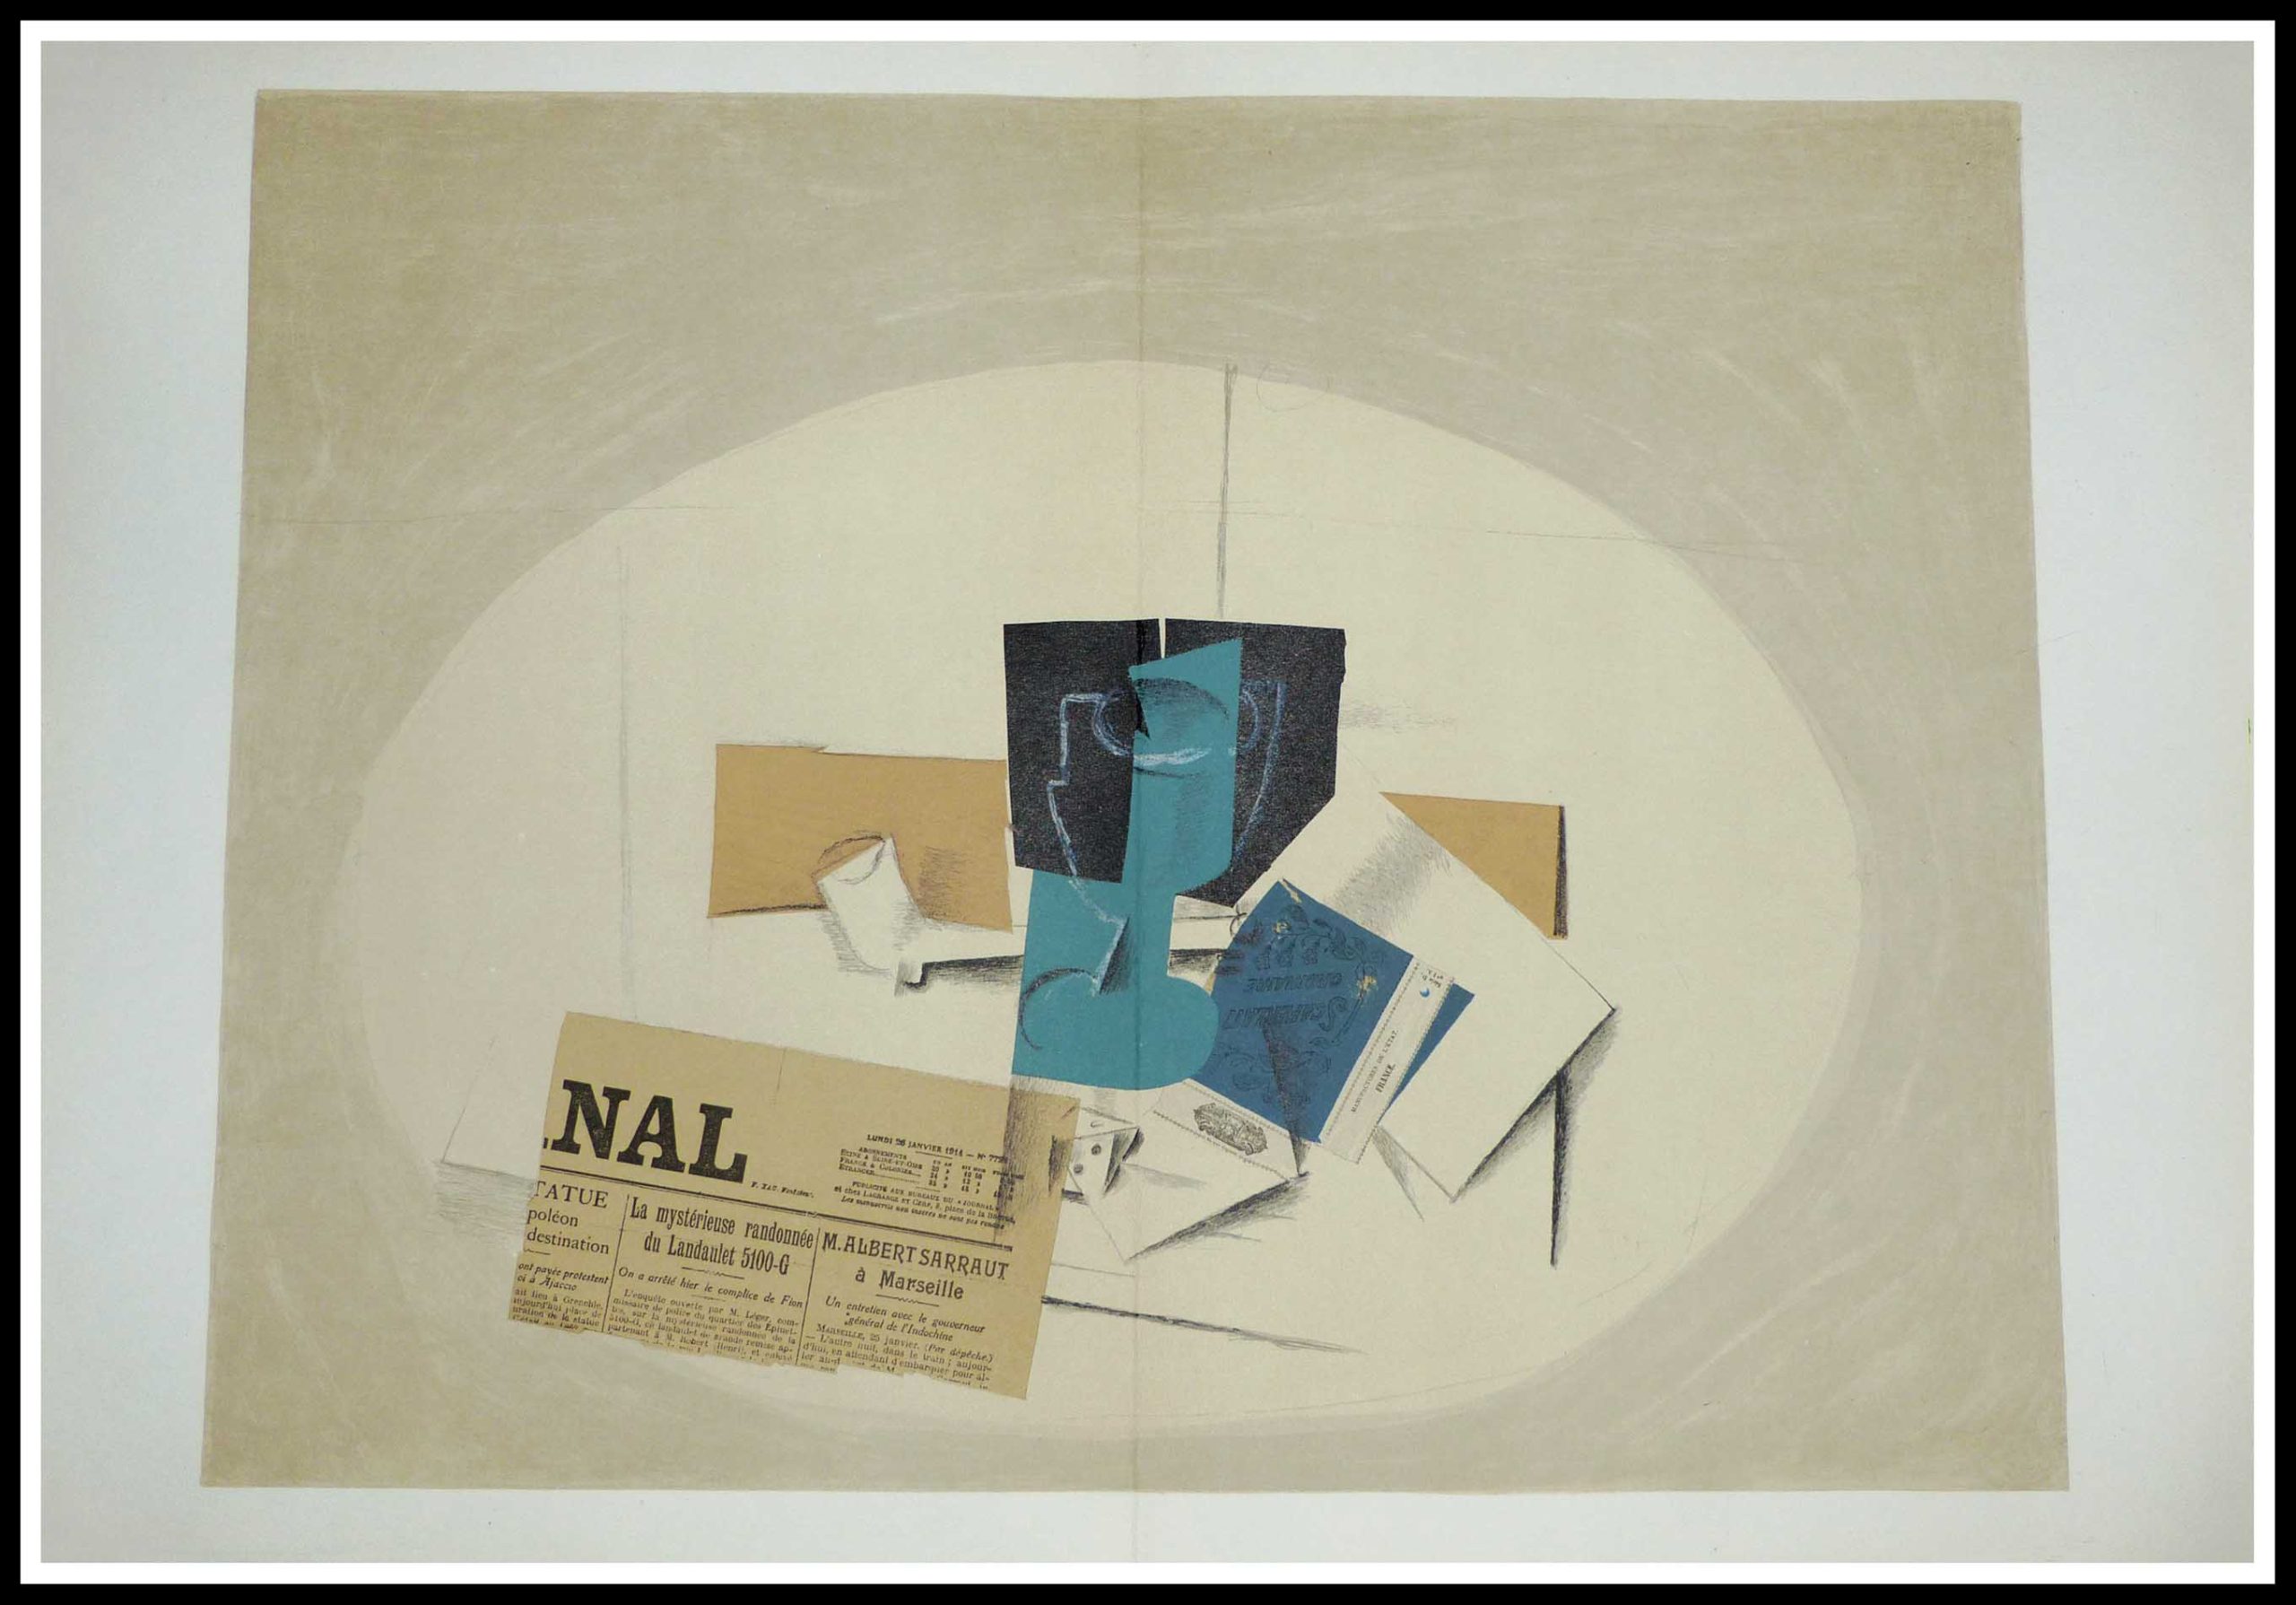 (alt="Georges BRAQUE, Composition, newspaper, lithograph from Derrière le Miroir 1963 printed by ARTE")